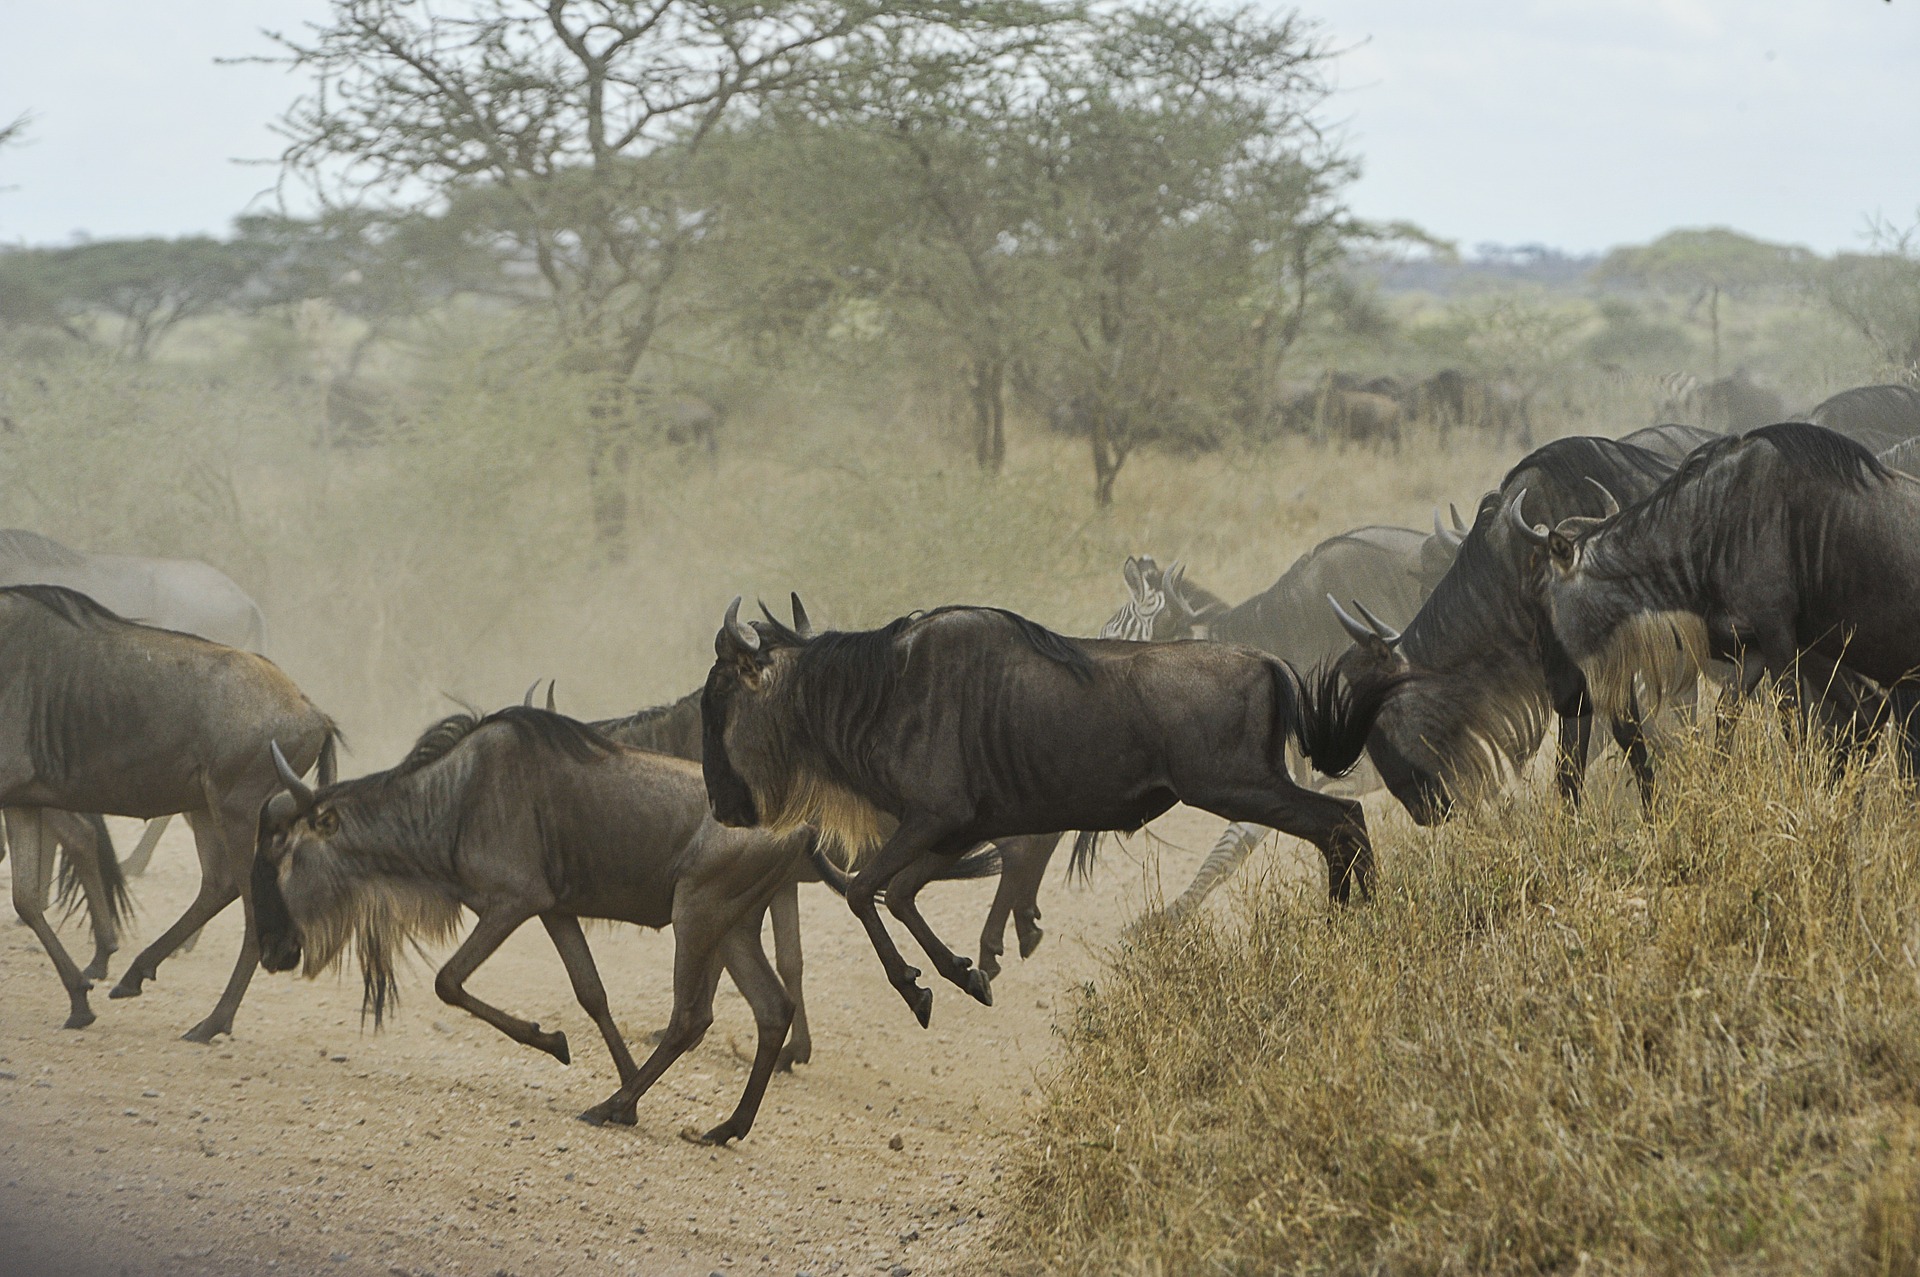 Wildebeests, Serengeti National Park